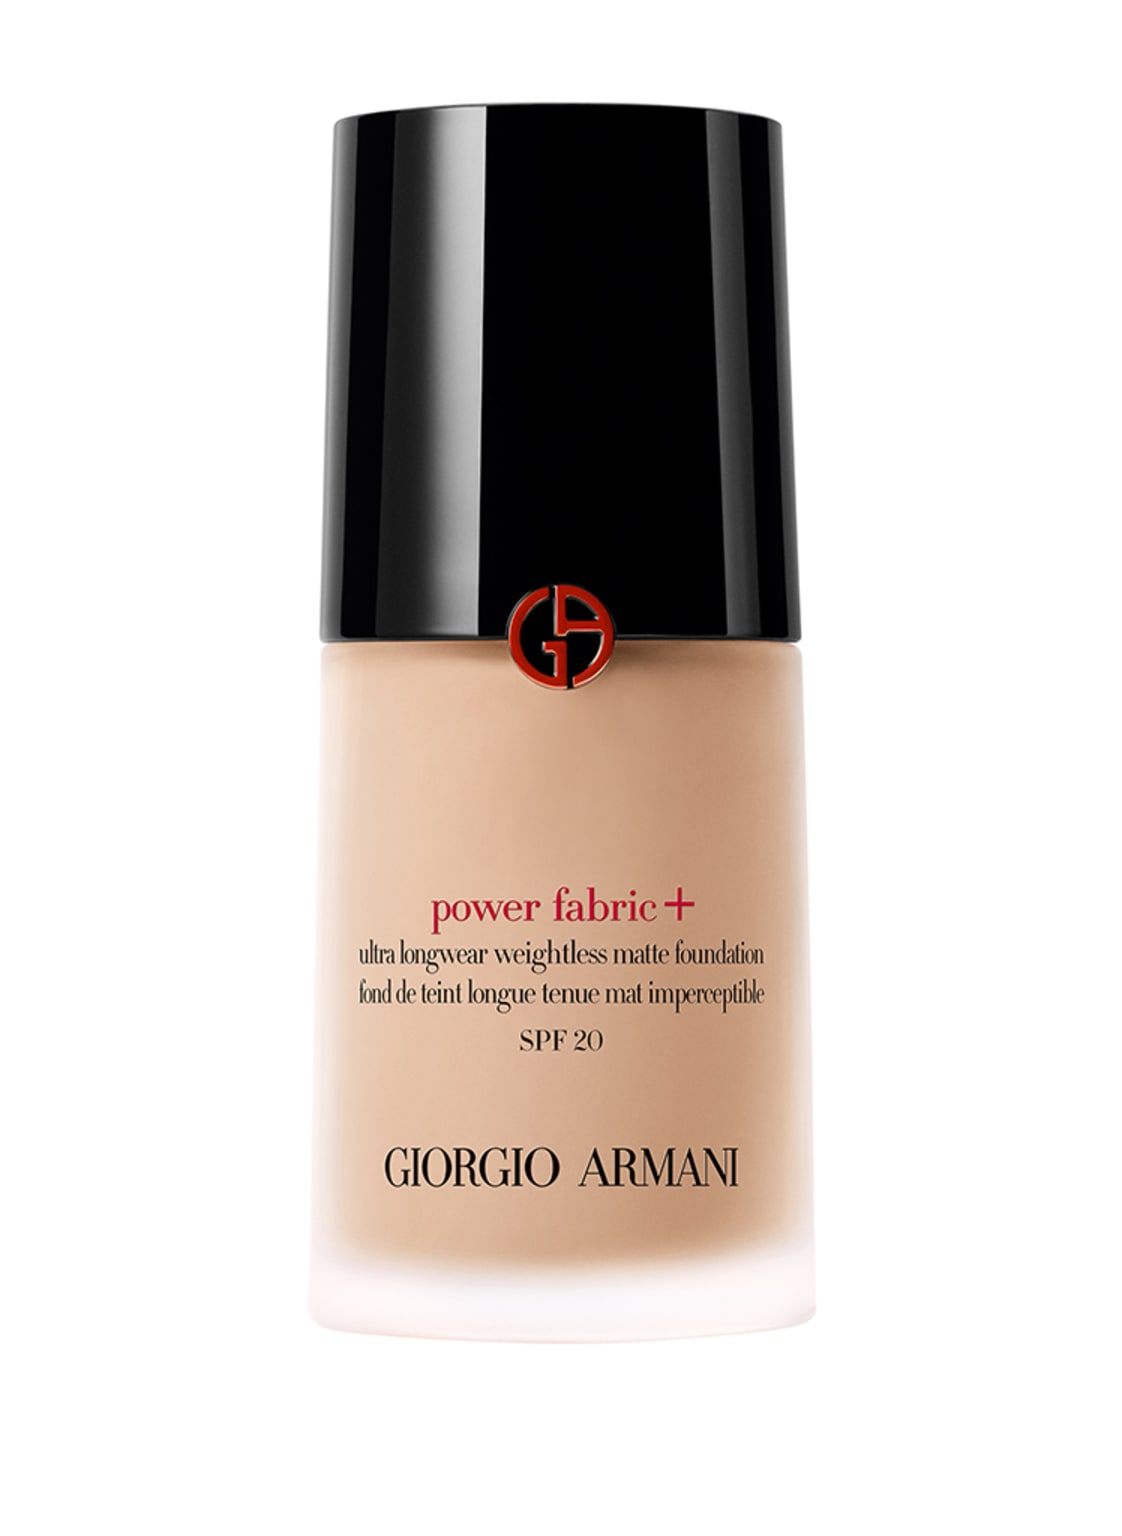 Giorgio Armani Beauty Power Fabric + Foundation von GIORGIO ARMANI BEAUTY